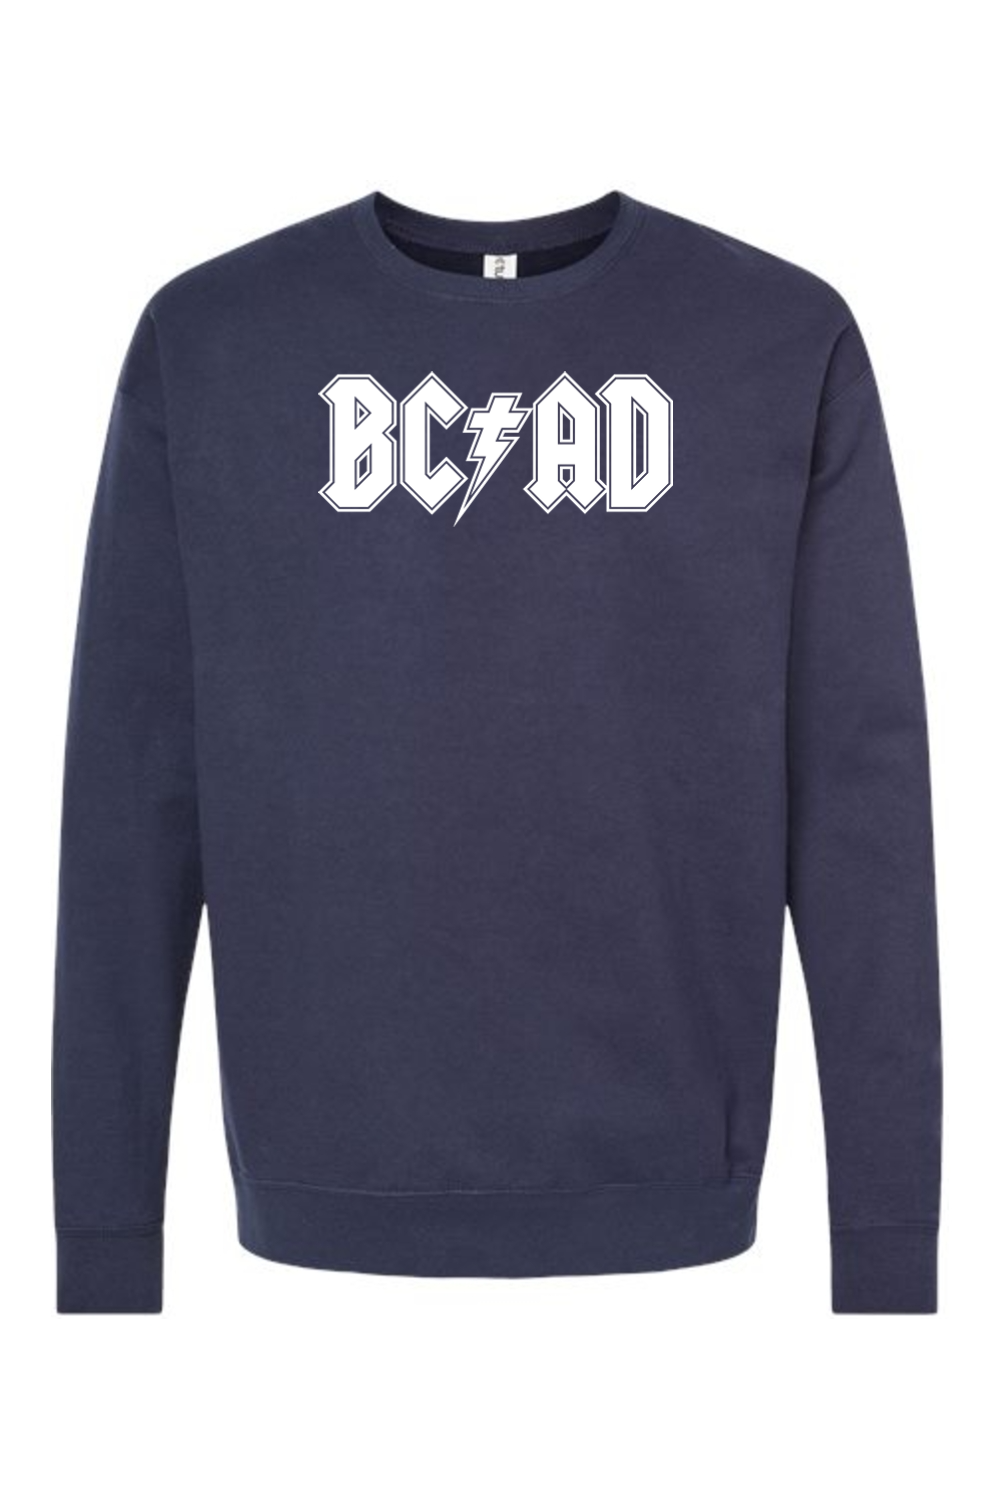 BCAD - White Crewneck Sweatshirt